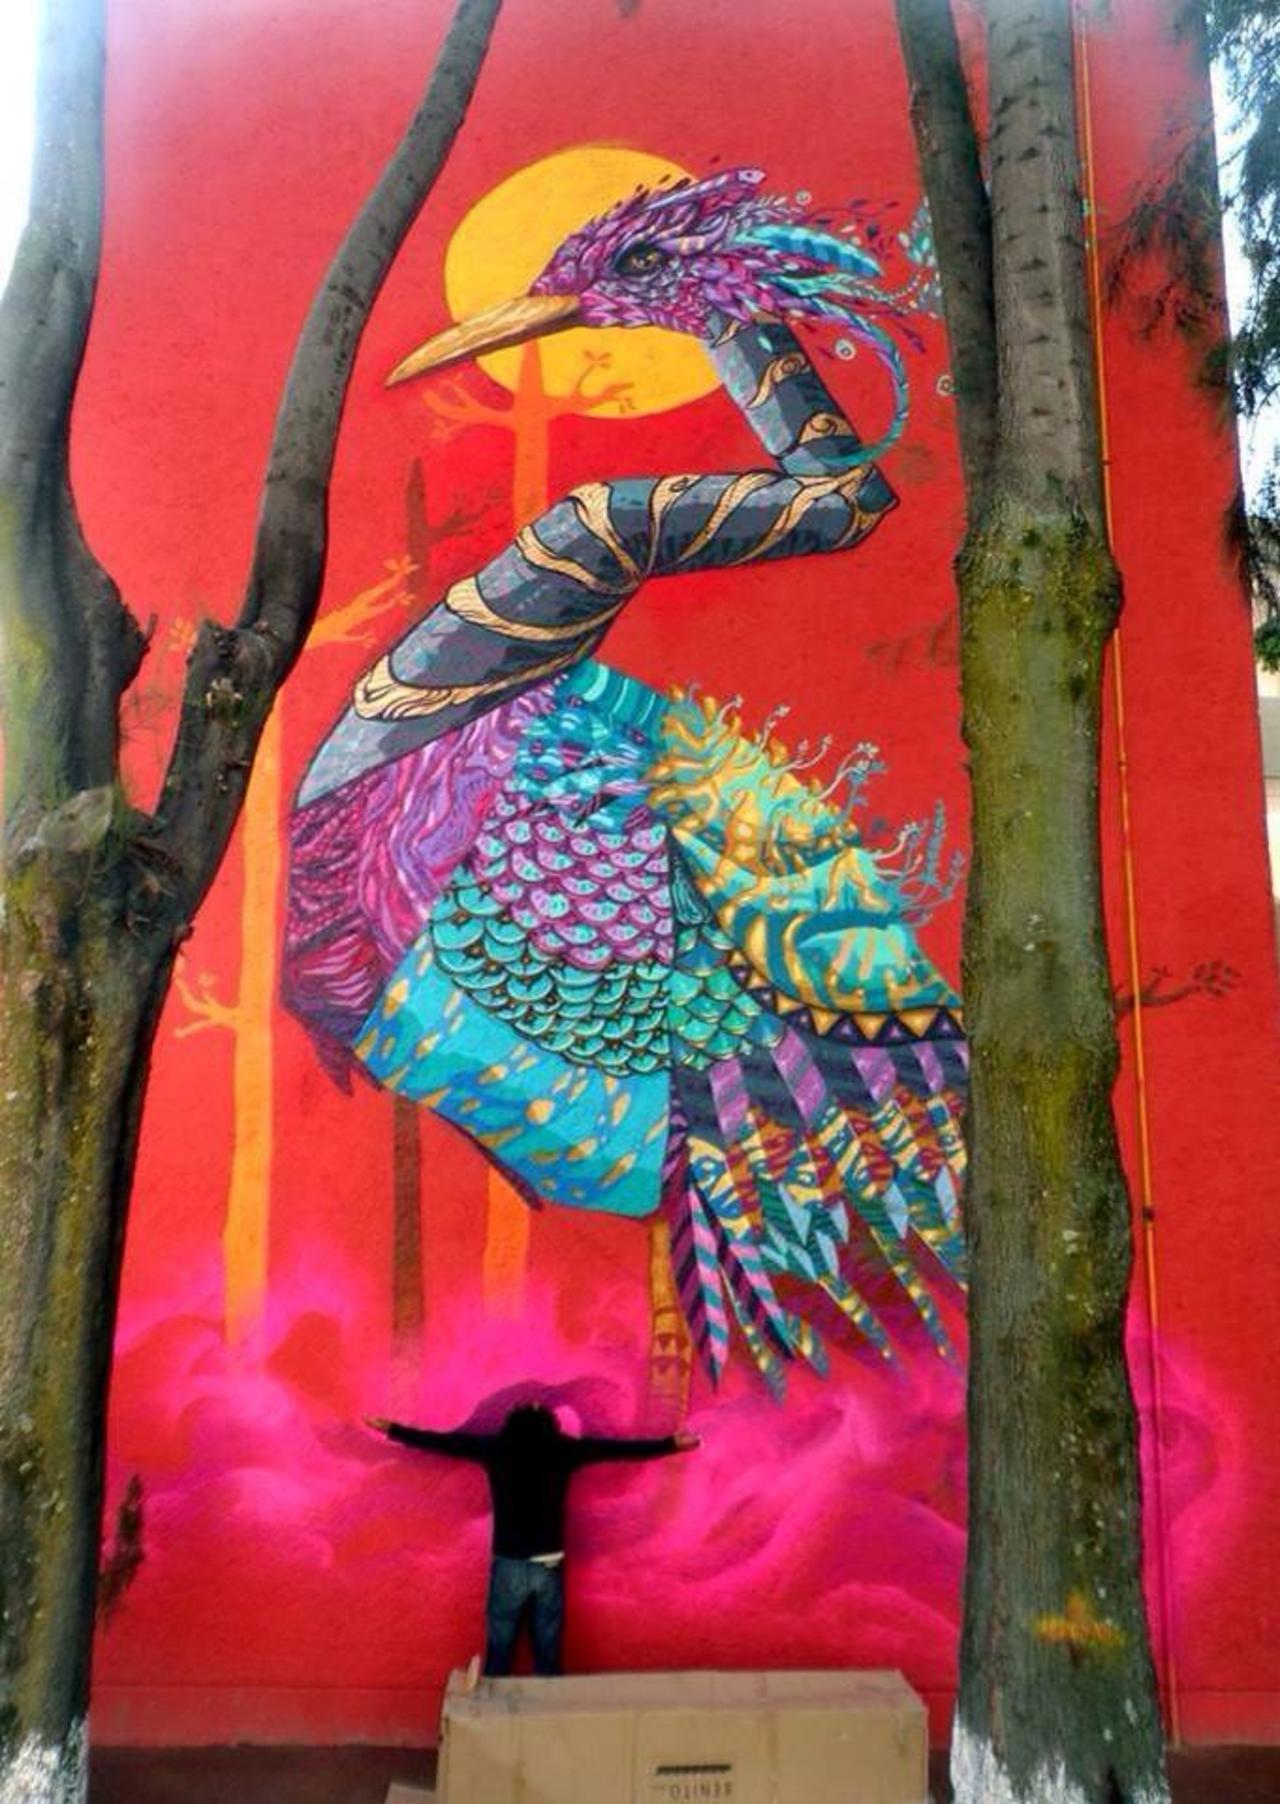 'Songs of Colour'

Sublime Nature in Street Art by NacHo Wm ft. Farid Rueda 

#art #arte #graffiti #streetart http://t.co/fUYbd0msWl